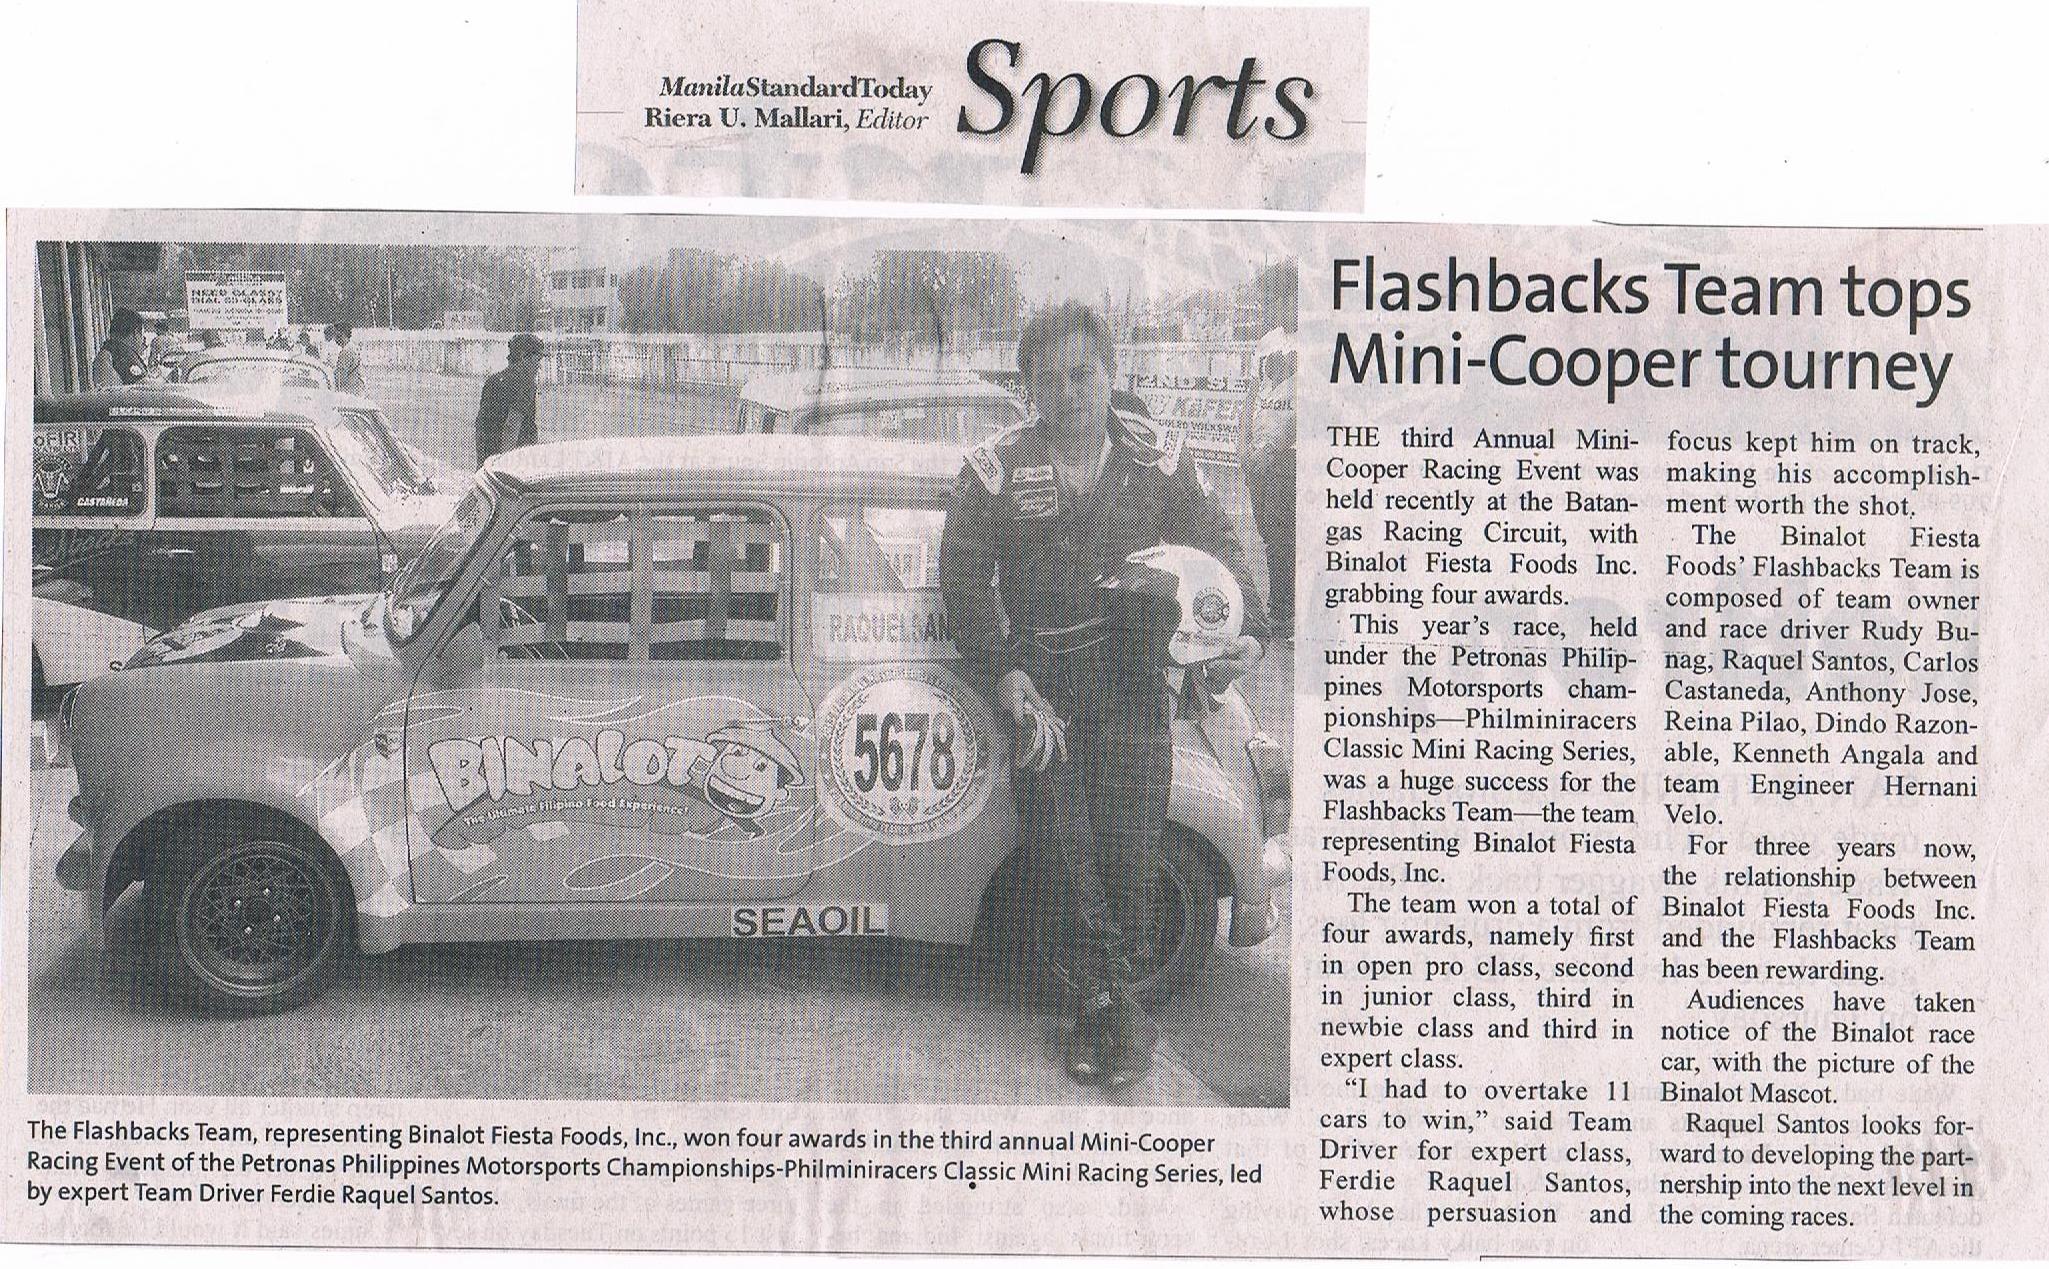 Flashbacks Team tops Mini-Cooper tourney, June 15, 2013, Manila Standard Today